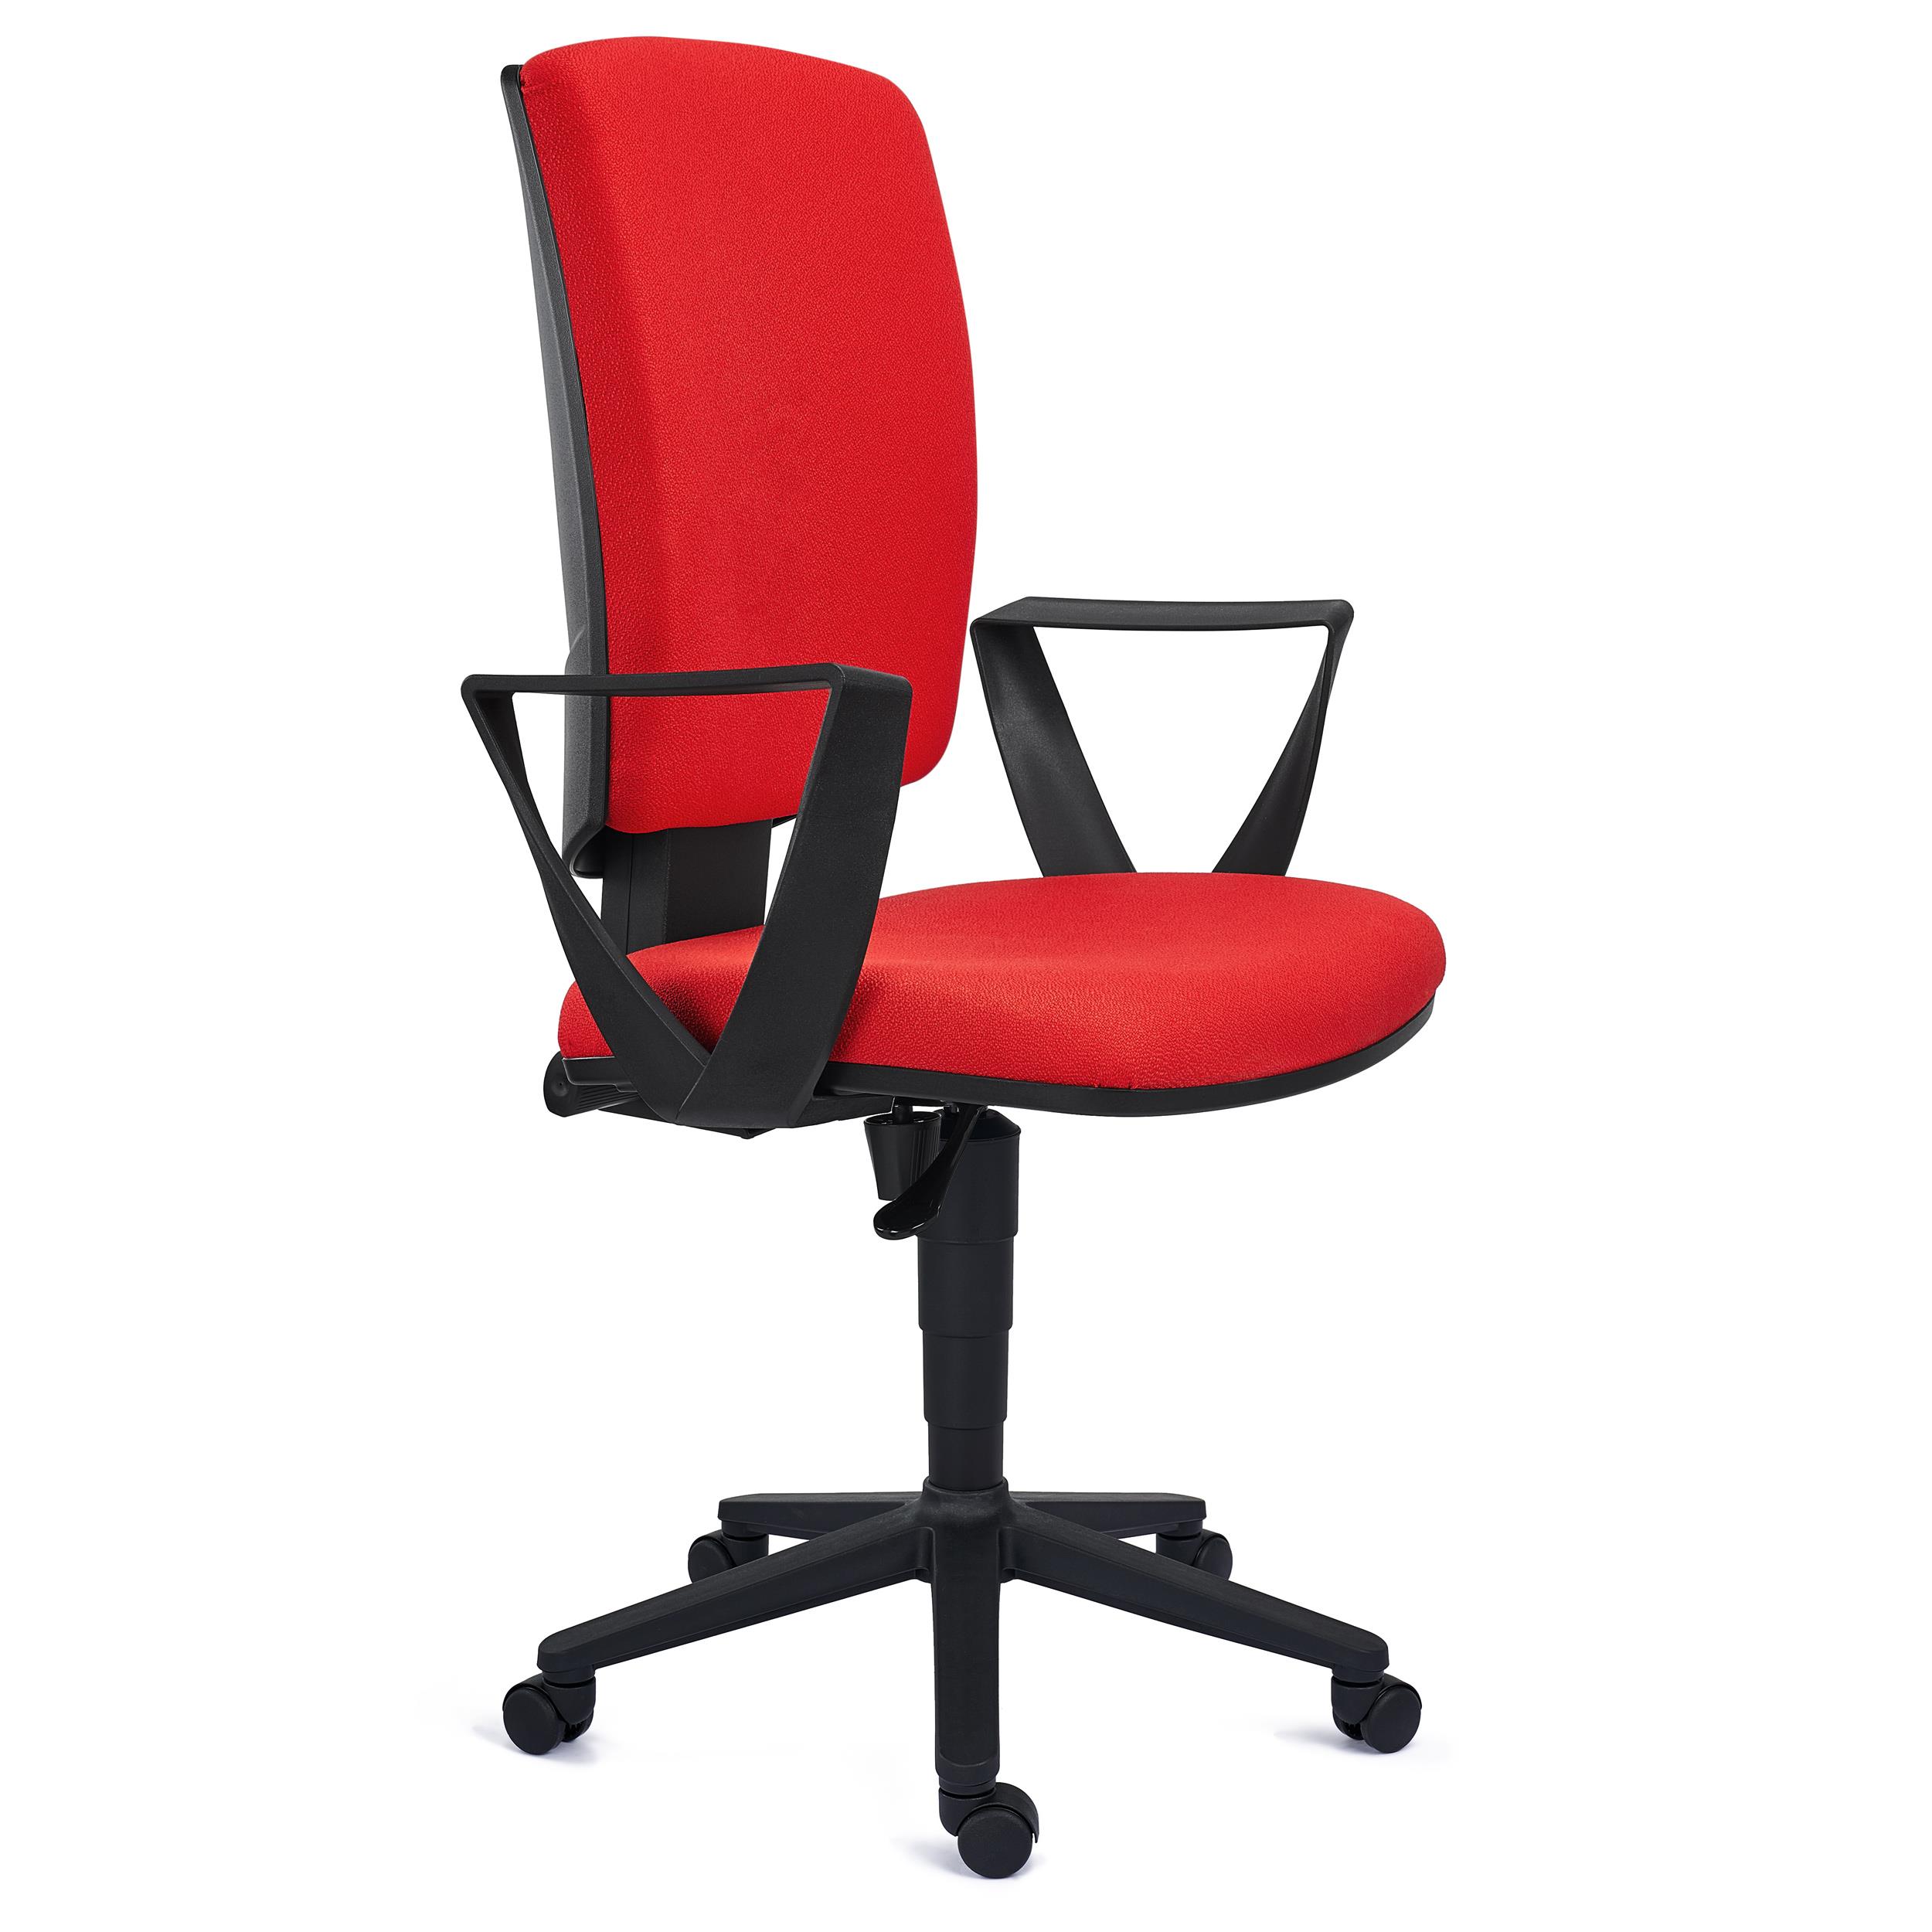 Bürostuhl ATLAS STOFF, verstellbare Rückenlehne, dicke Polsterung, Farbe Rot